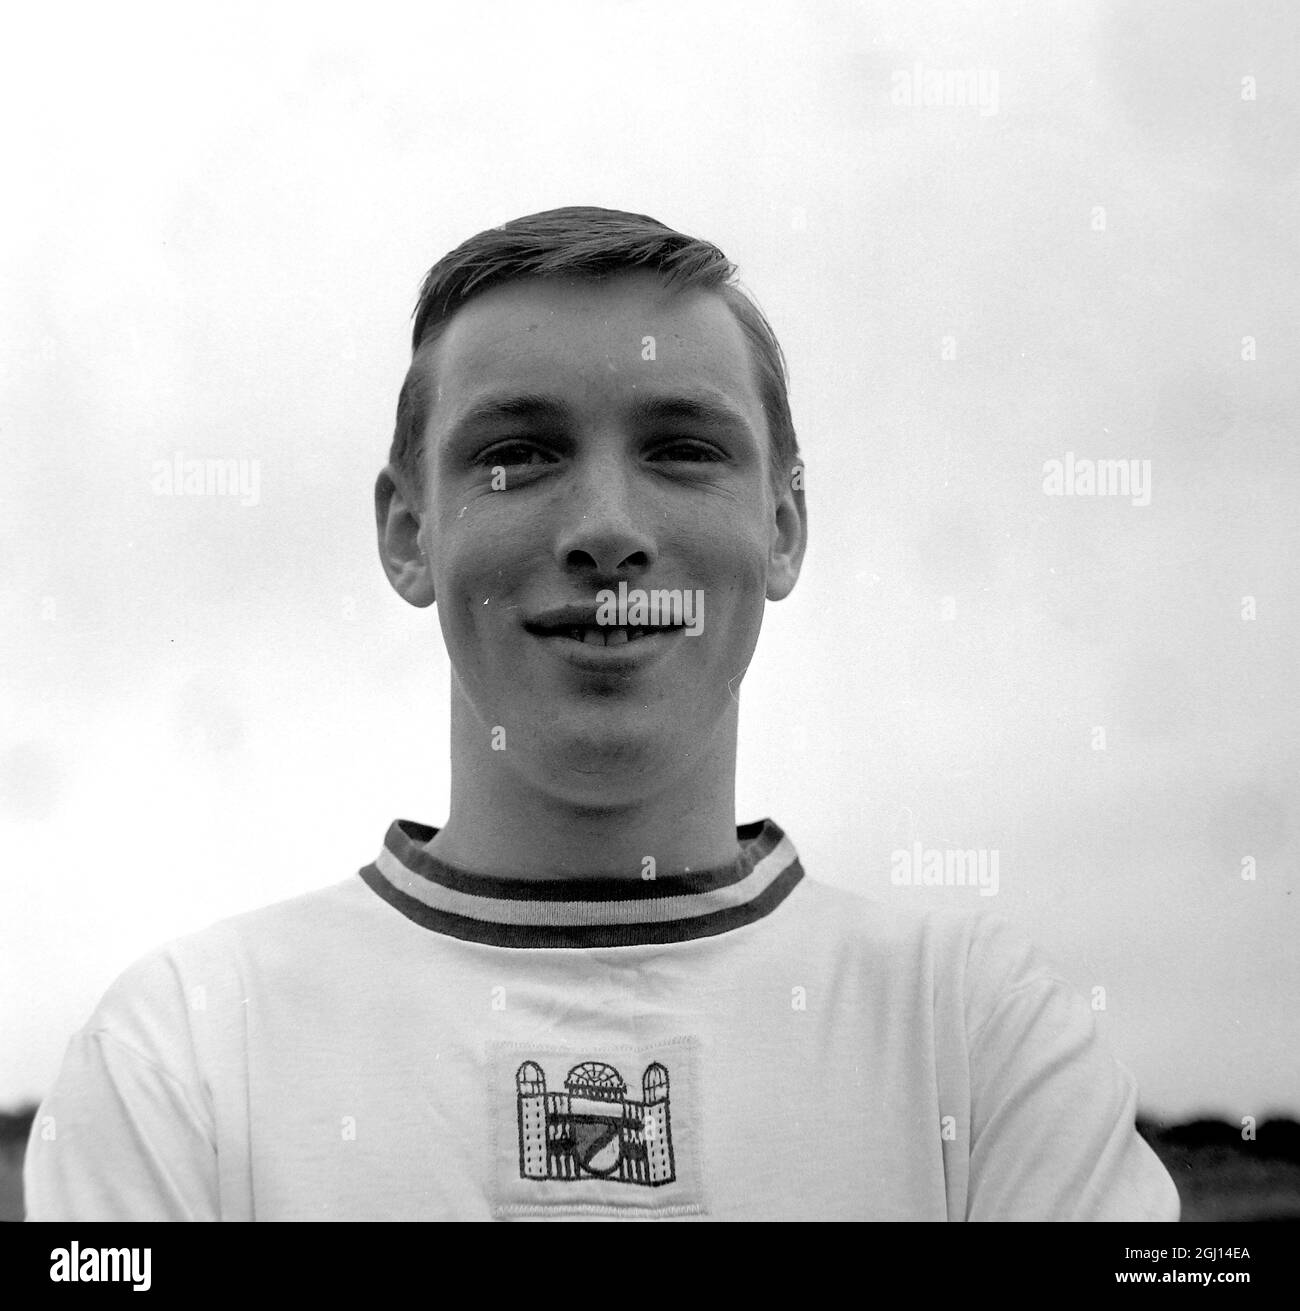 ALAN STEPHENSON - PORTRIAT DU FOOTBALLEUR, JOUEUR DE L'ÉQUIPE DU CRYSTAL  PALACE FC FOOTBALL CLUB - ; 8 AOÛT 1962 Photo Stock - Alamy